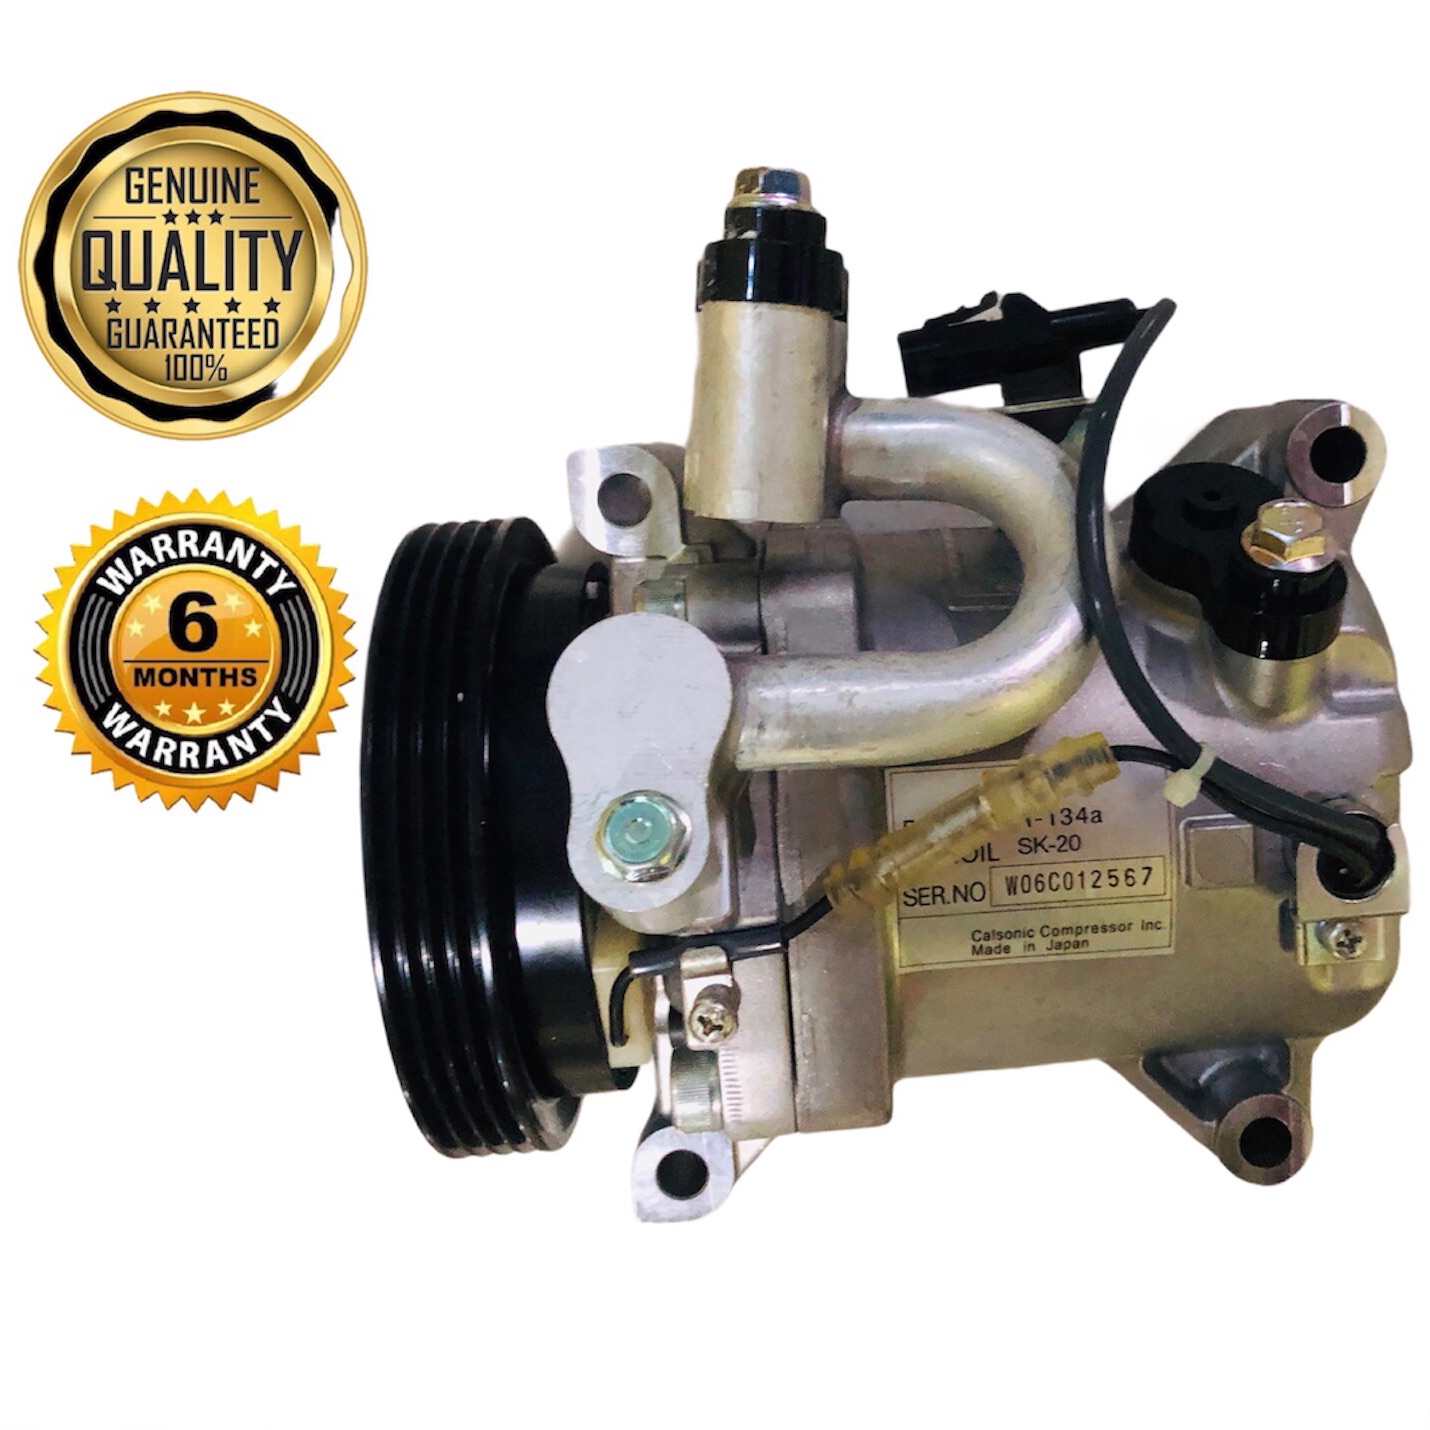 Suzuki Swift Seiko Seiki Compressor Car aircon parts supplies warranty  original | Lazada PH